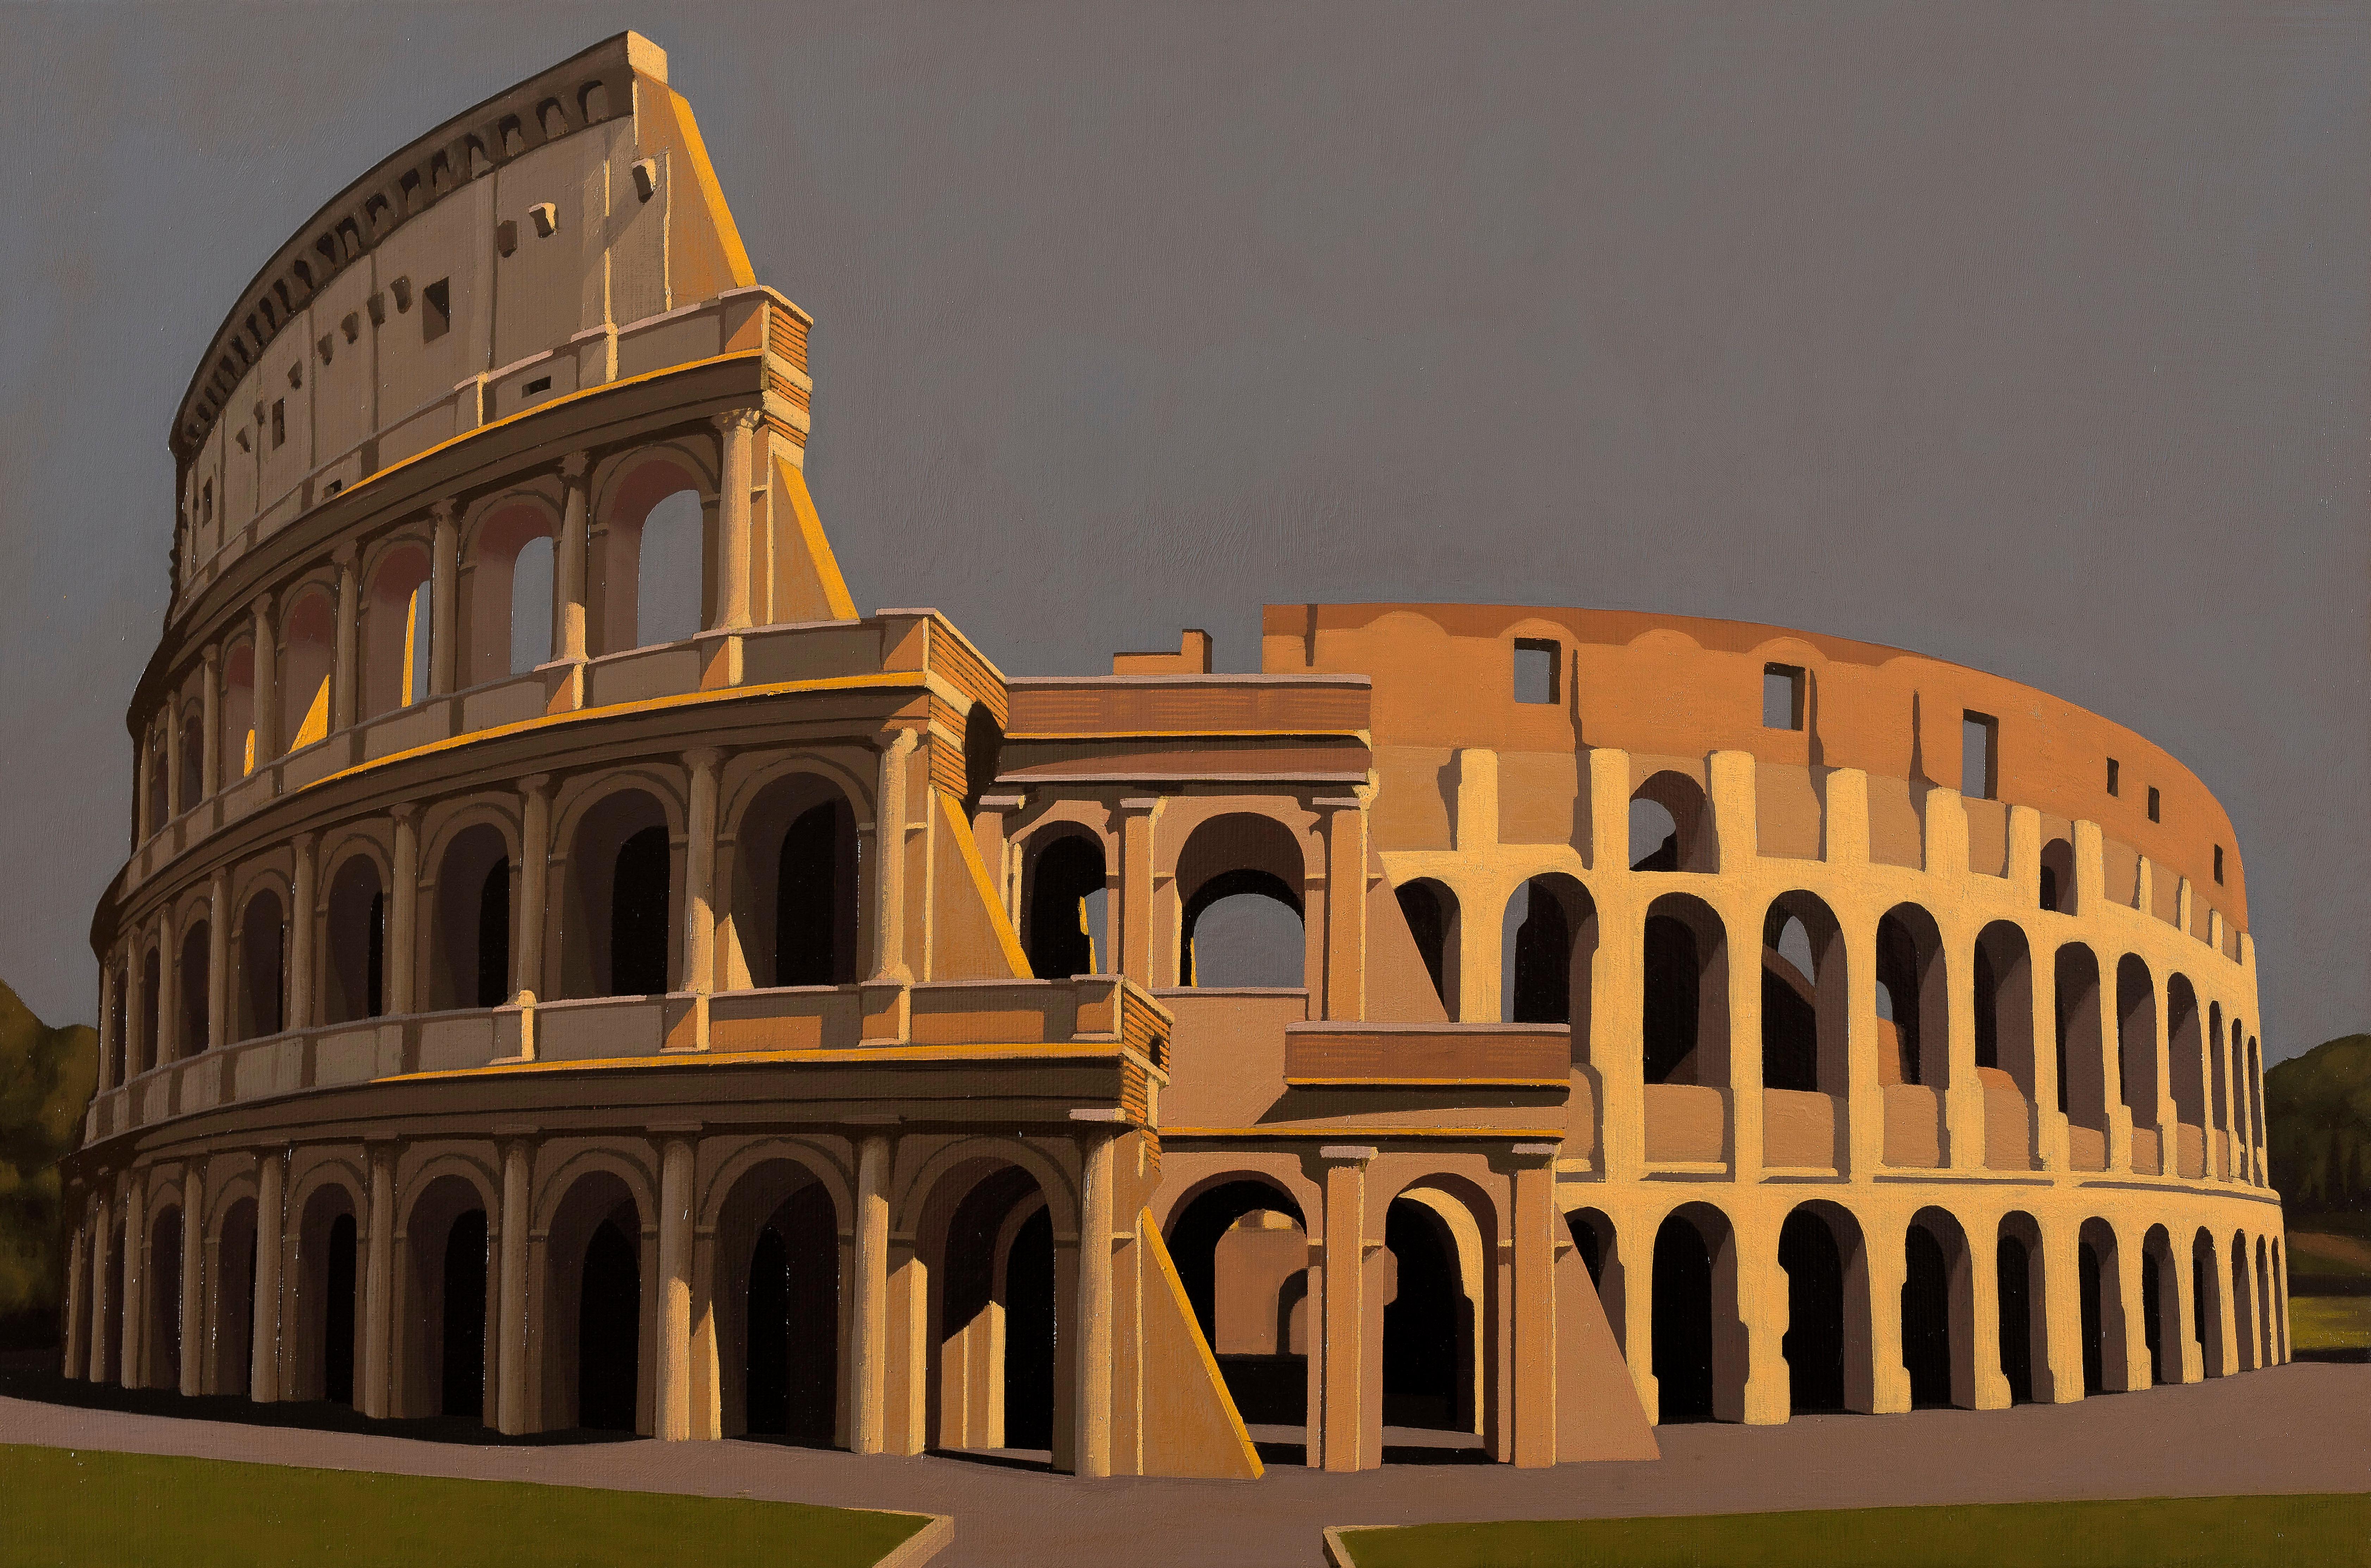 Mauro Reggio Landscape Painting - Colosseum oil landscape of Rome in ocra and grey by fine italian painter